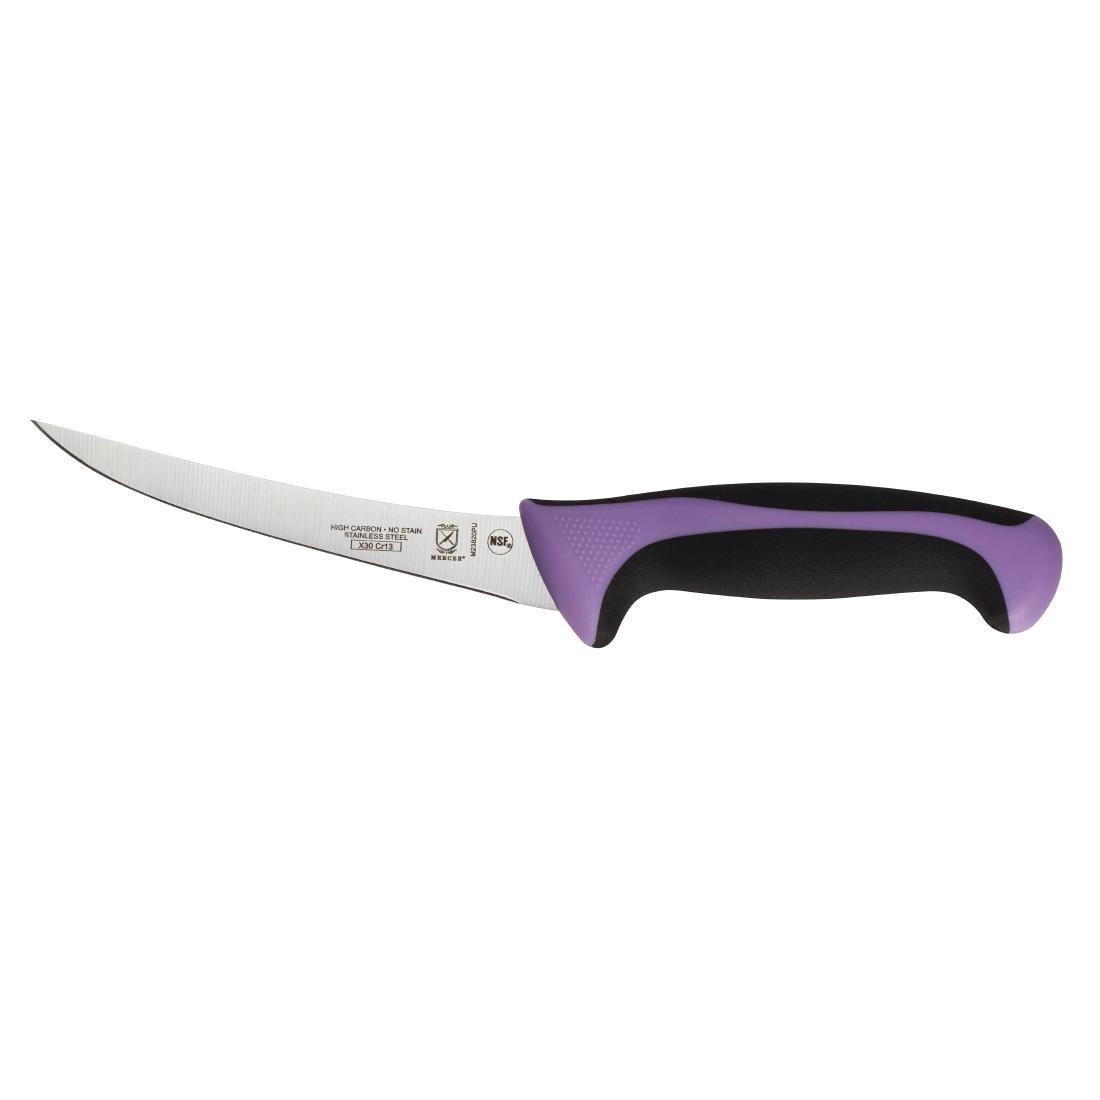 Mercer Culinary Allergen Safety Curved Boning Knife 15cm - FB506  - 1